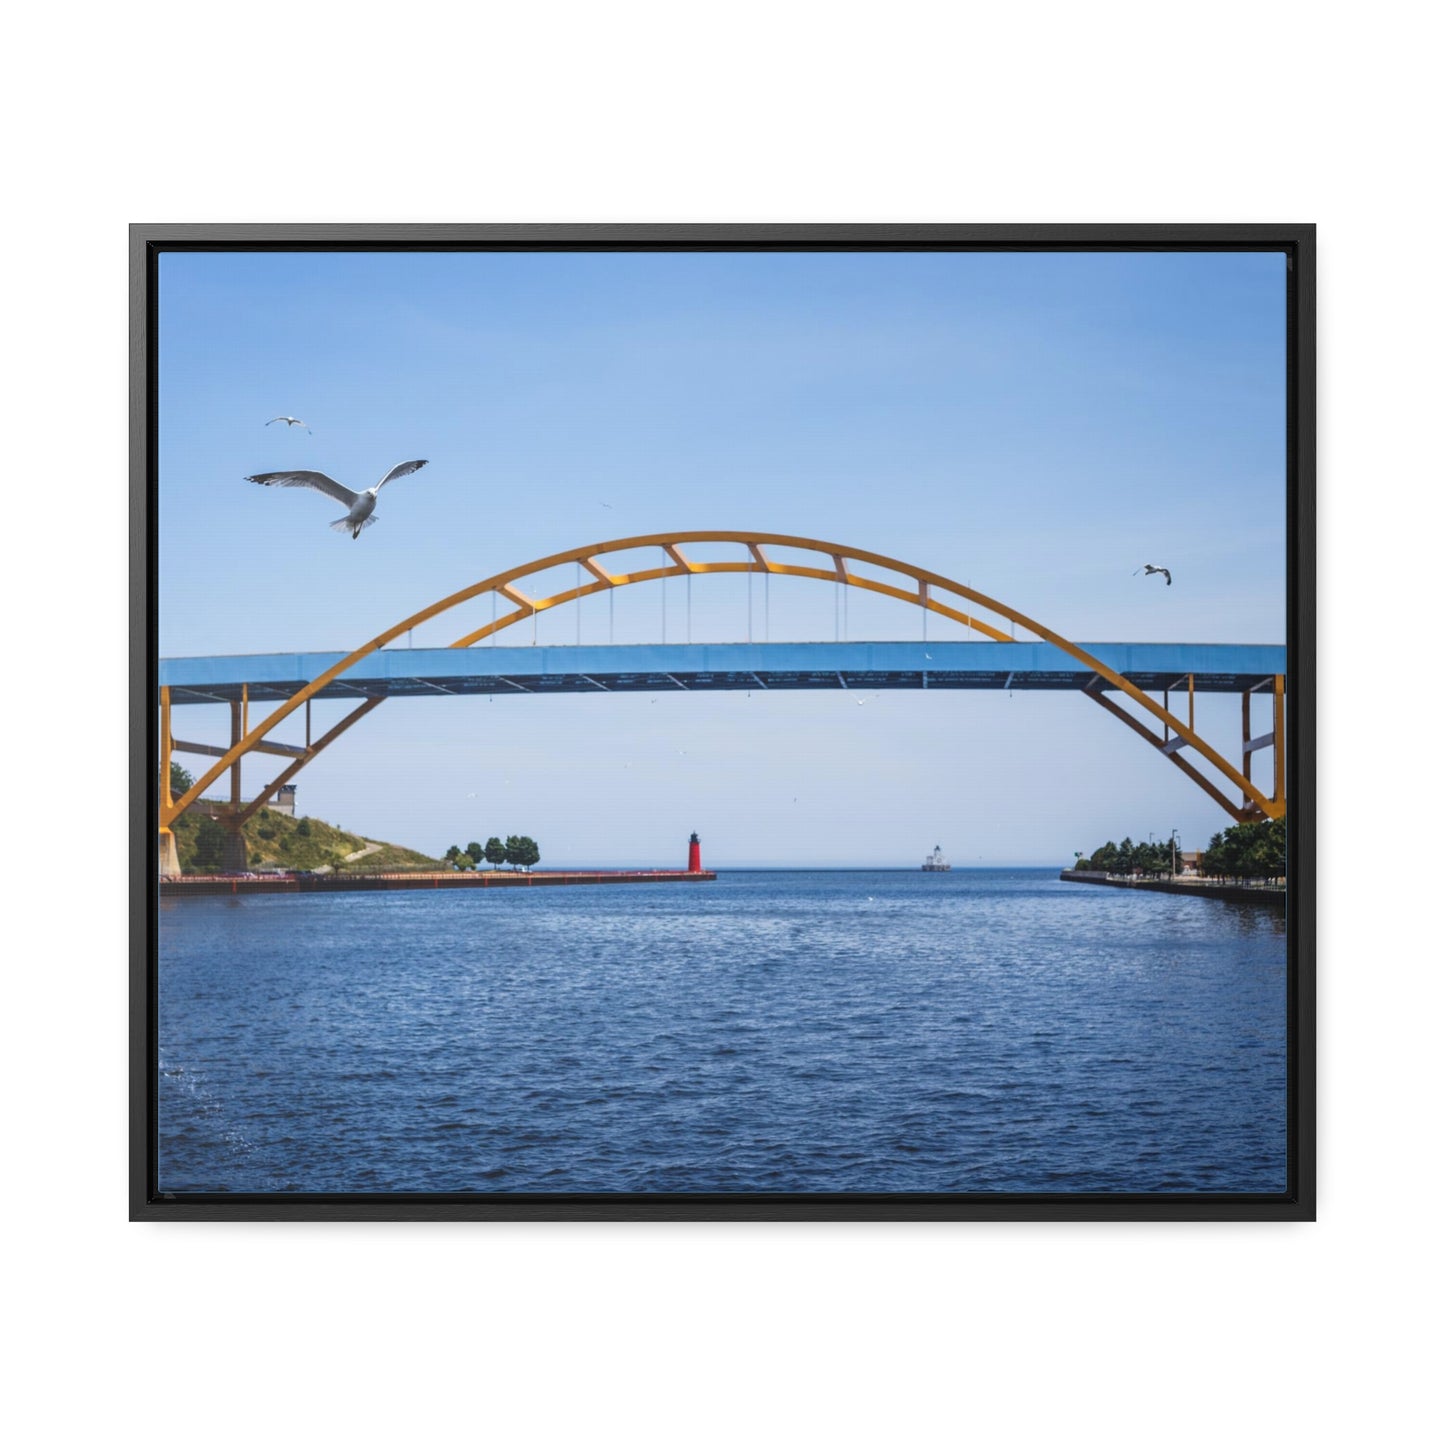 Milwaukee, Wisconsin’s Hoan Bridge and Seagulls, Photography Framed Canvas Wrap Wall Art